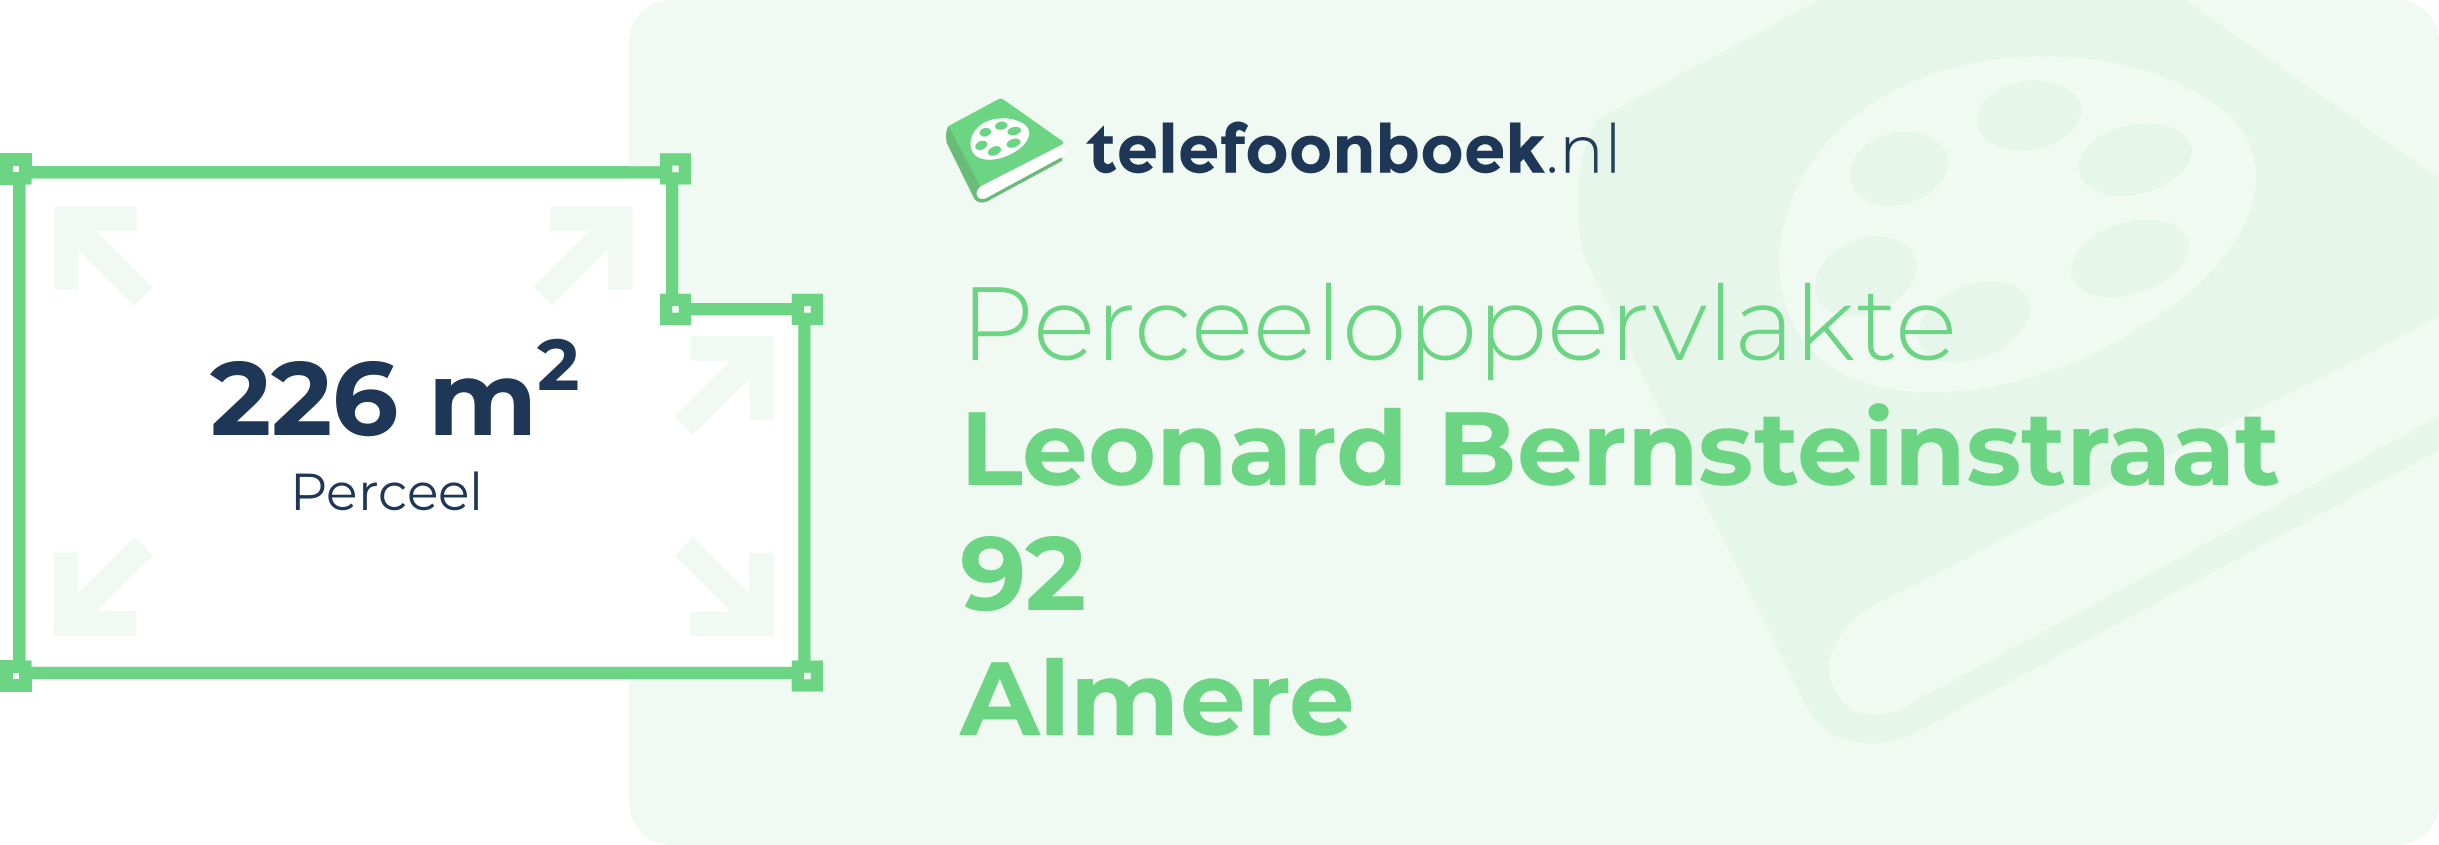 Perceeloppervlakte Leonard Bernsteinstraat 92 Almere